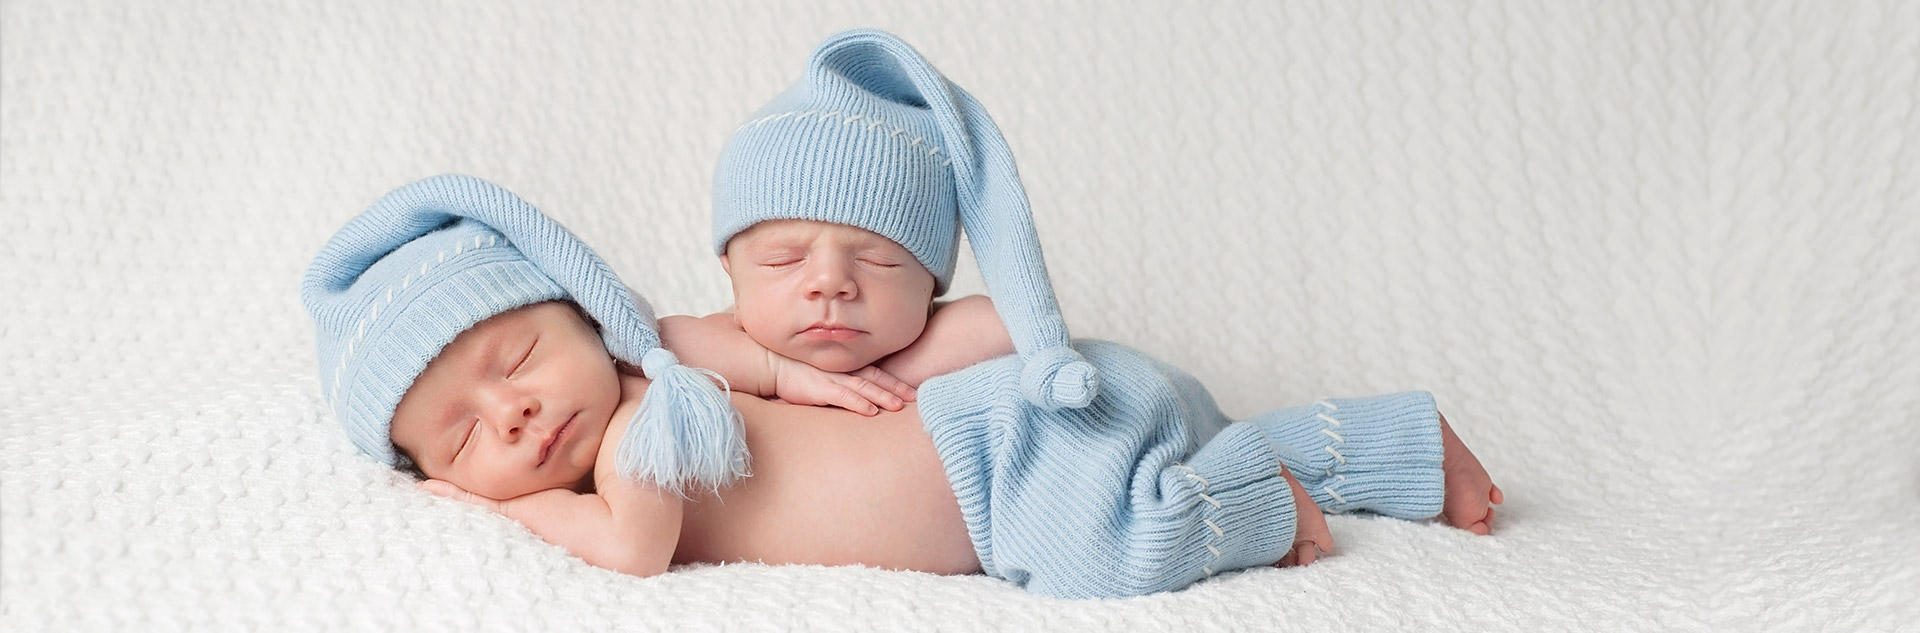 newborn twin boys potrait baby blue knit nightcaps and pants